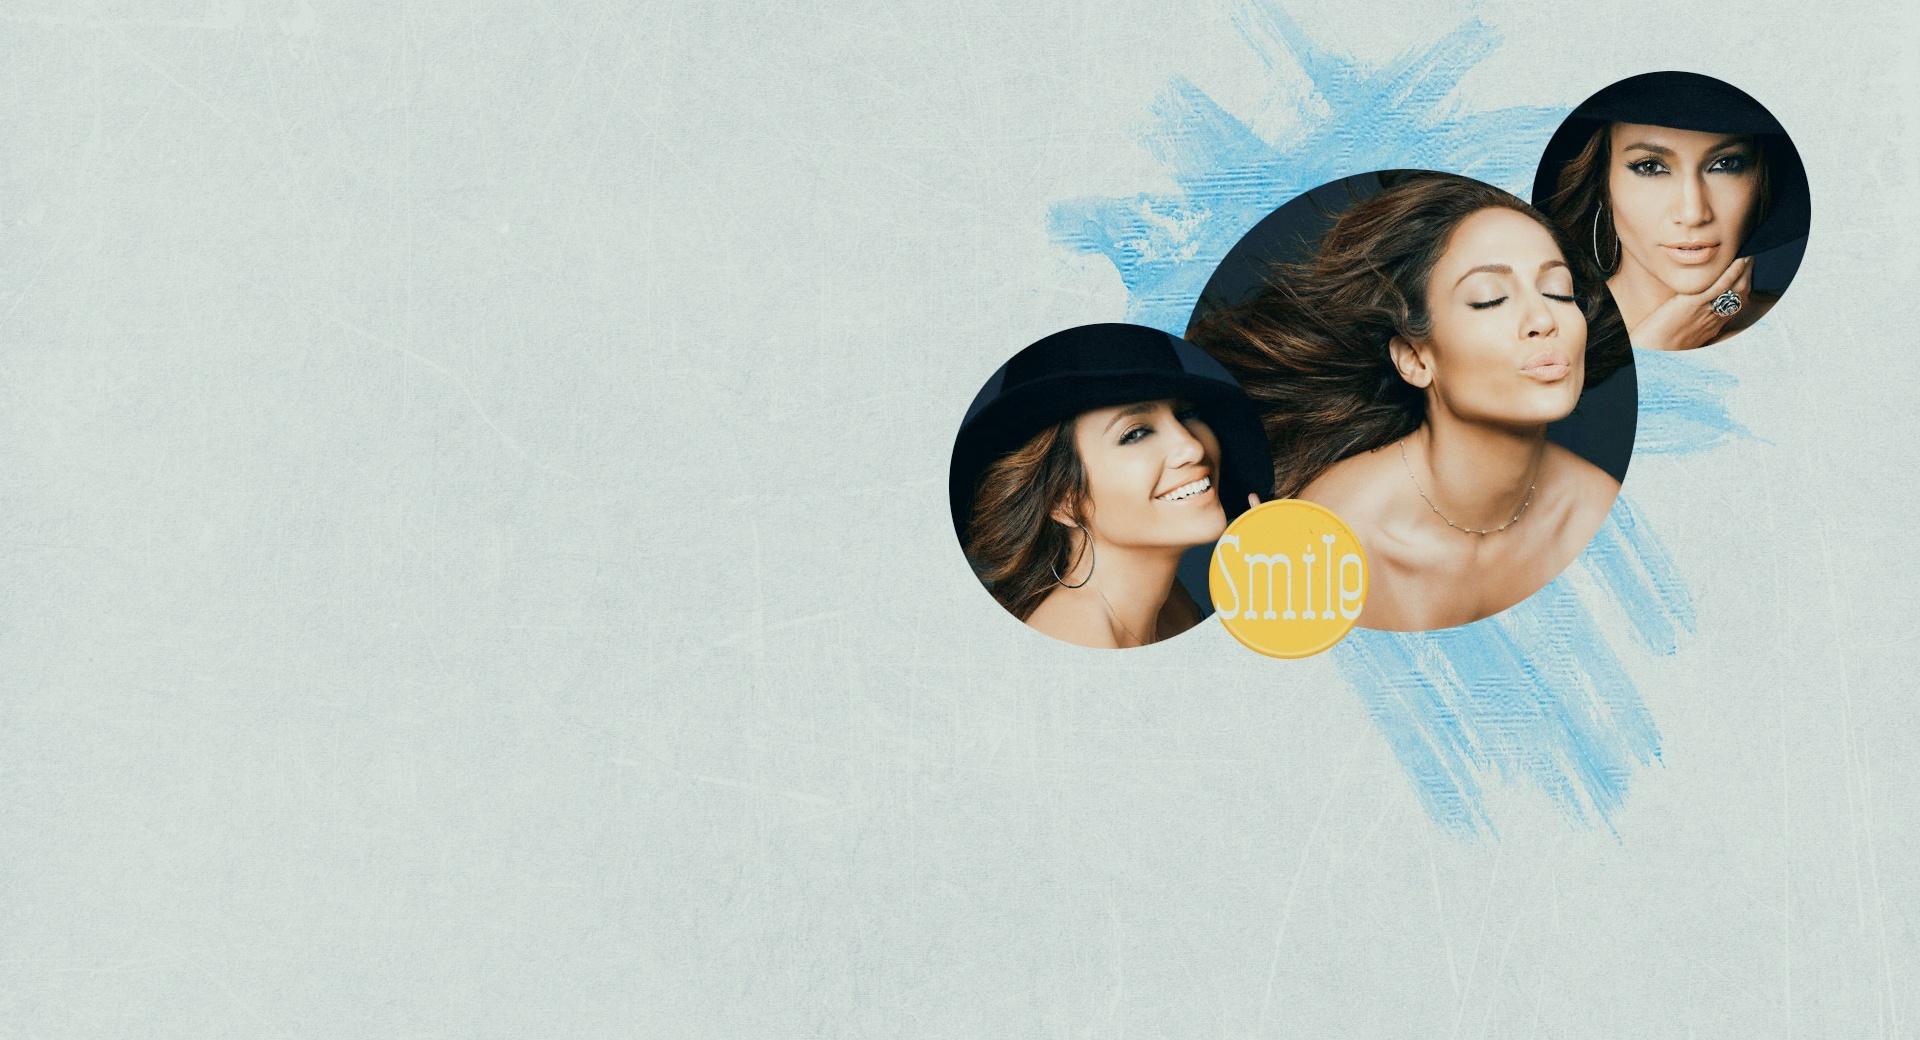 Jennifer Lopez Smile at 1280 x 960 size wallpapers HD quality